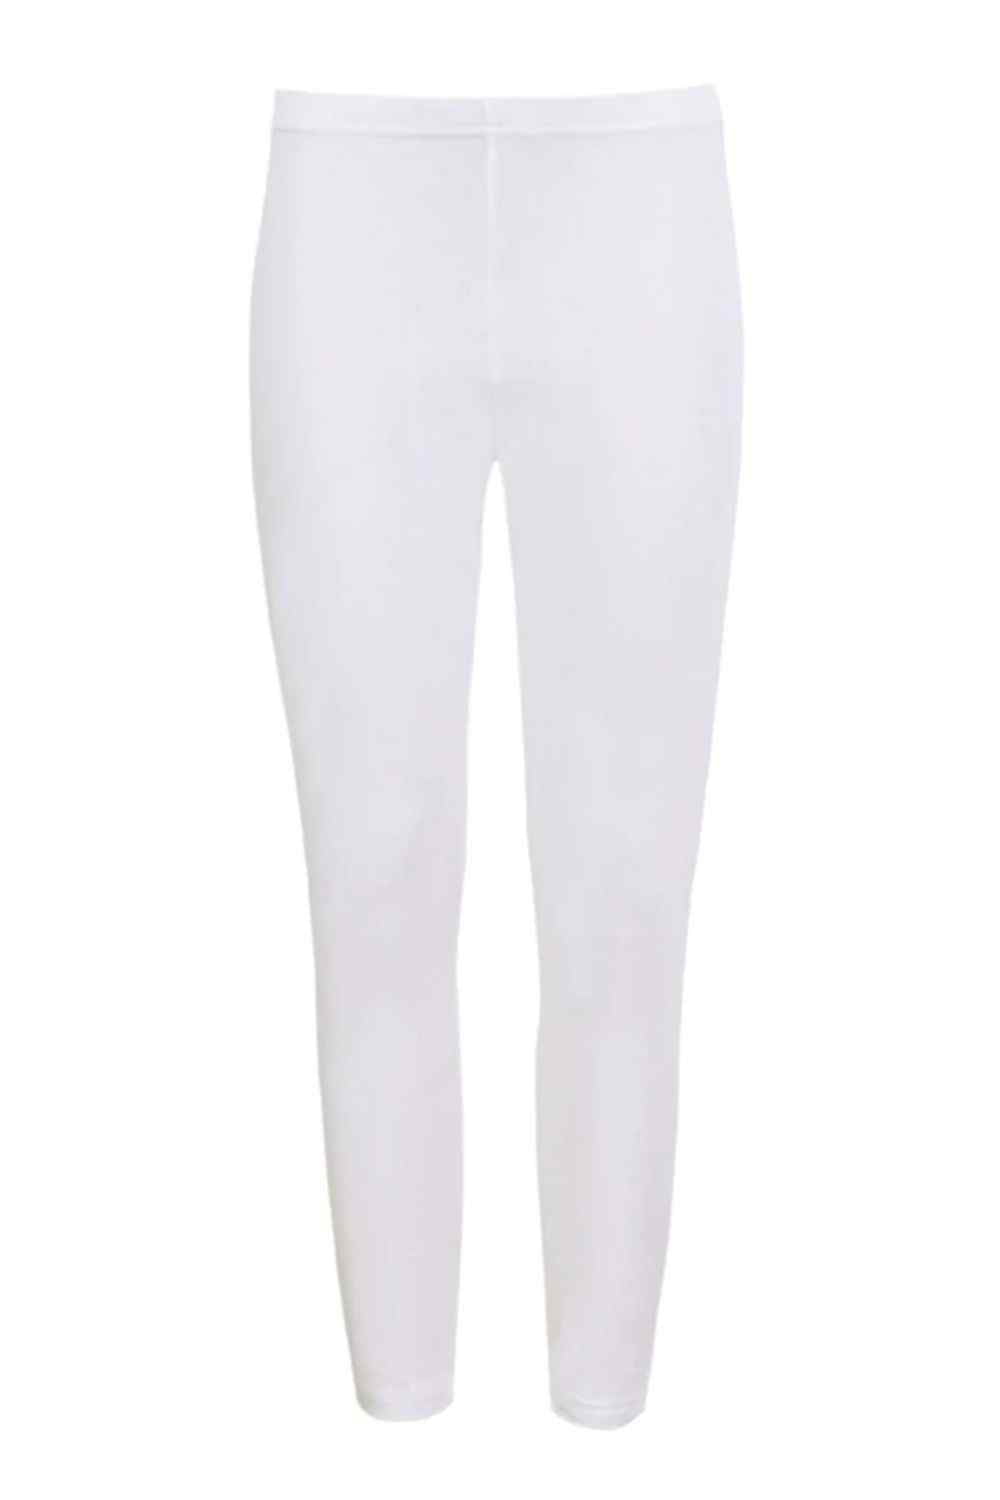 Buy online Silver Cotton Leggings from Capris & Leggings for Women by  V-mart for ₹469 at 1% off